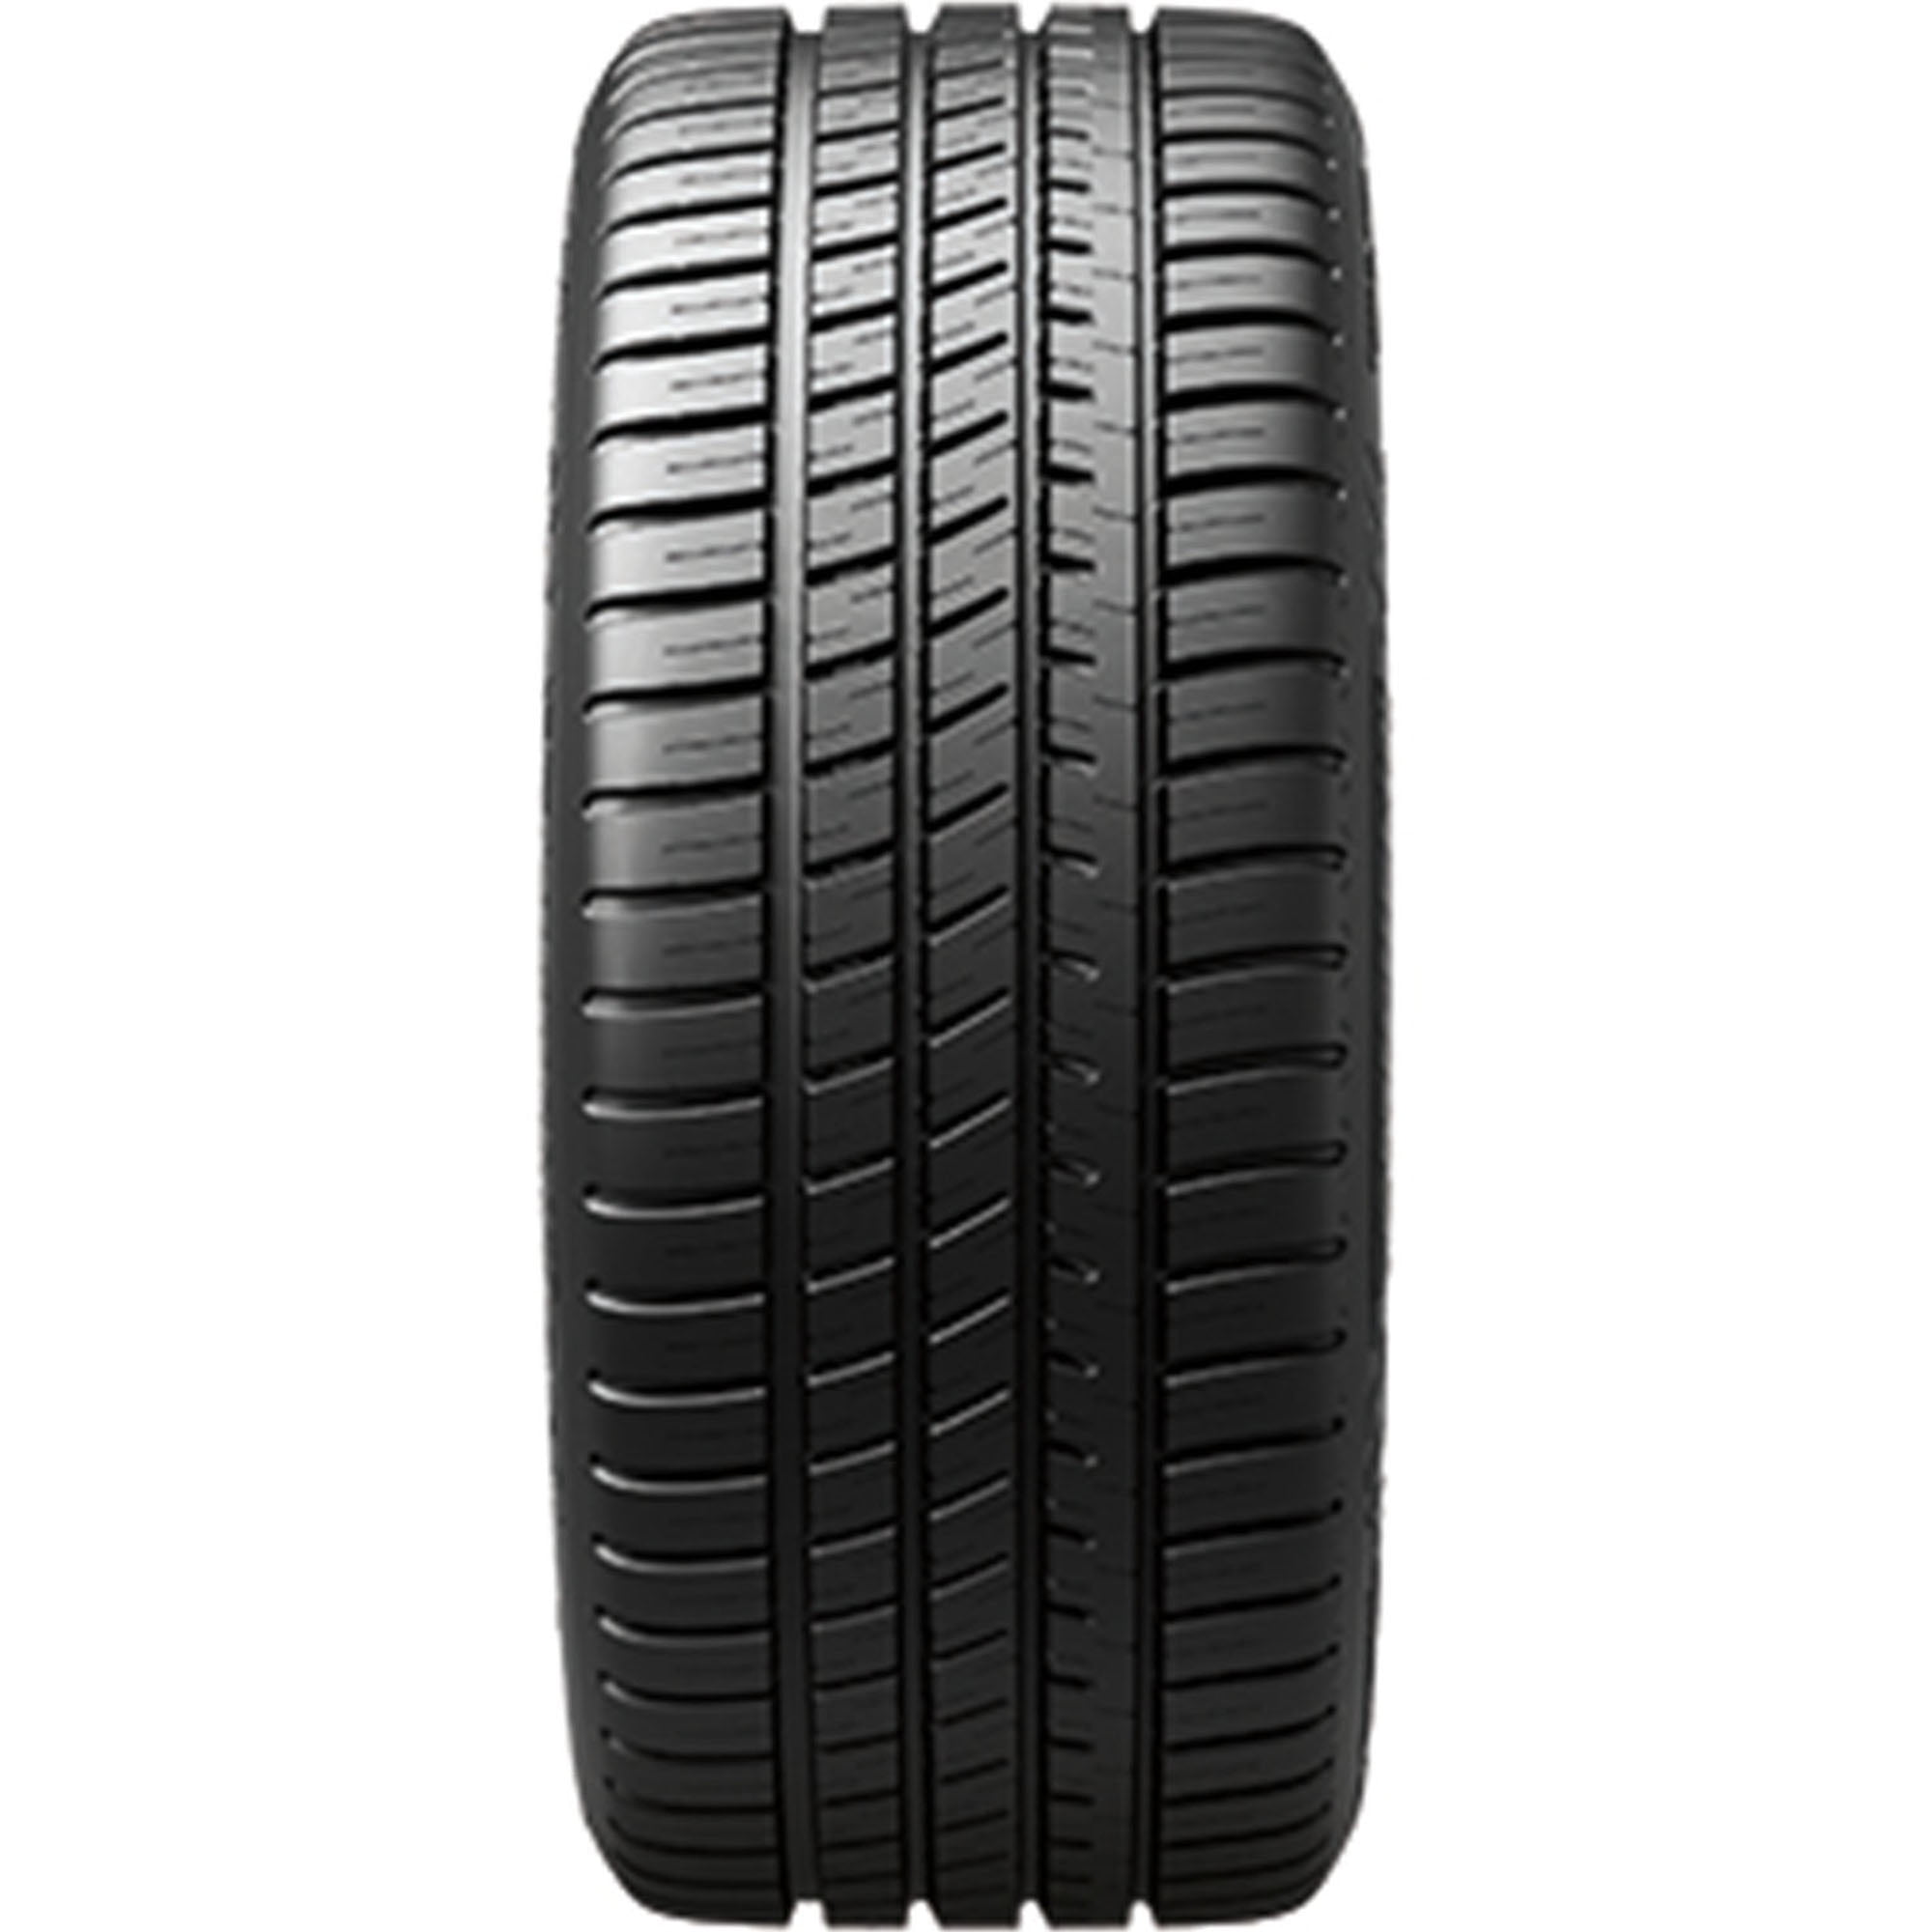 Michelin Pilot Sport A/S 3+ UHP All Season 195/45R16 84V XL Passenger Tire